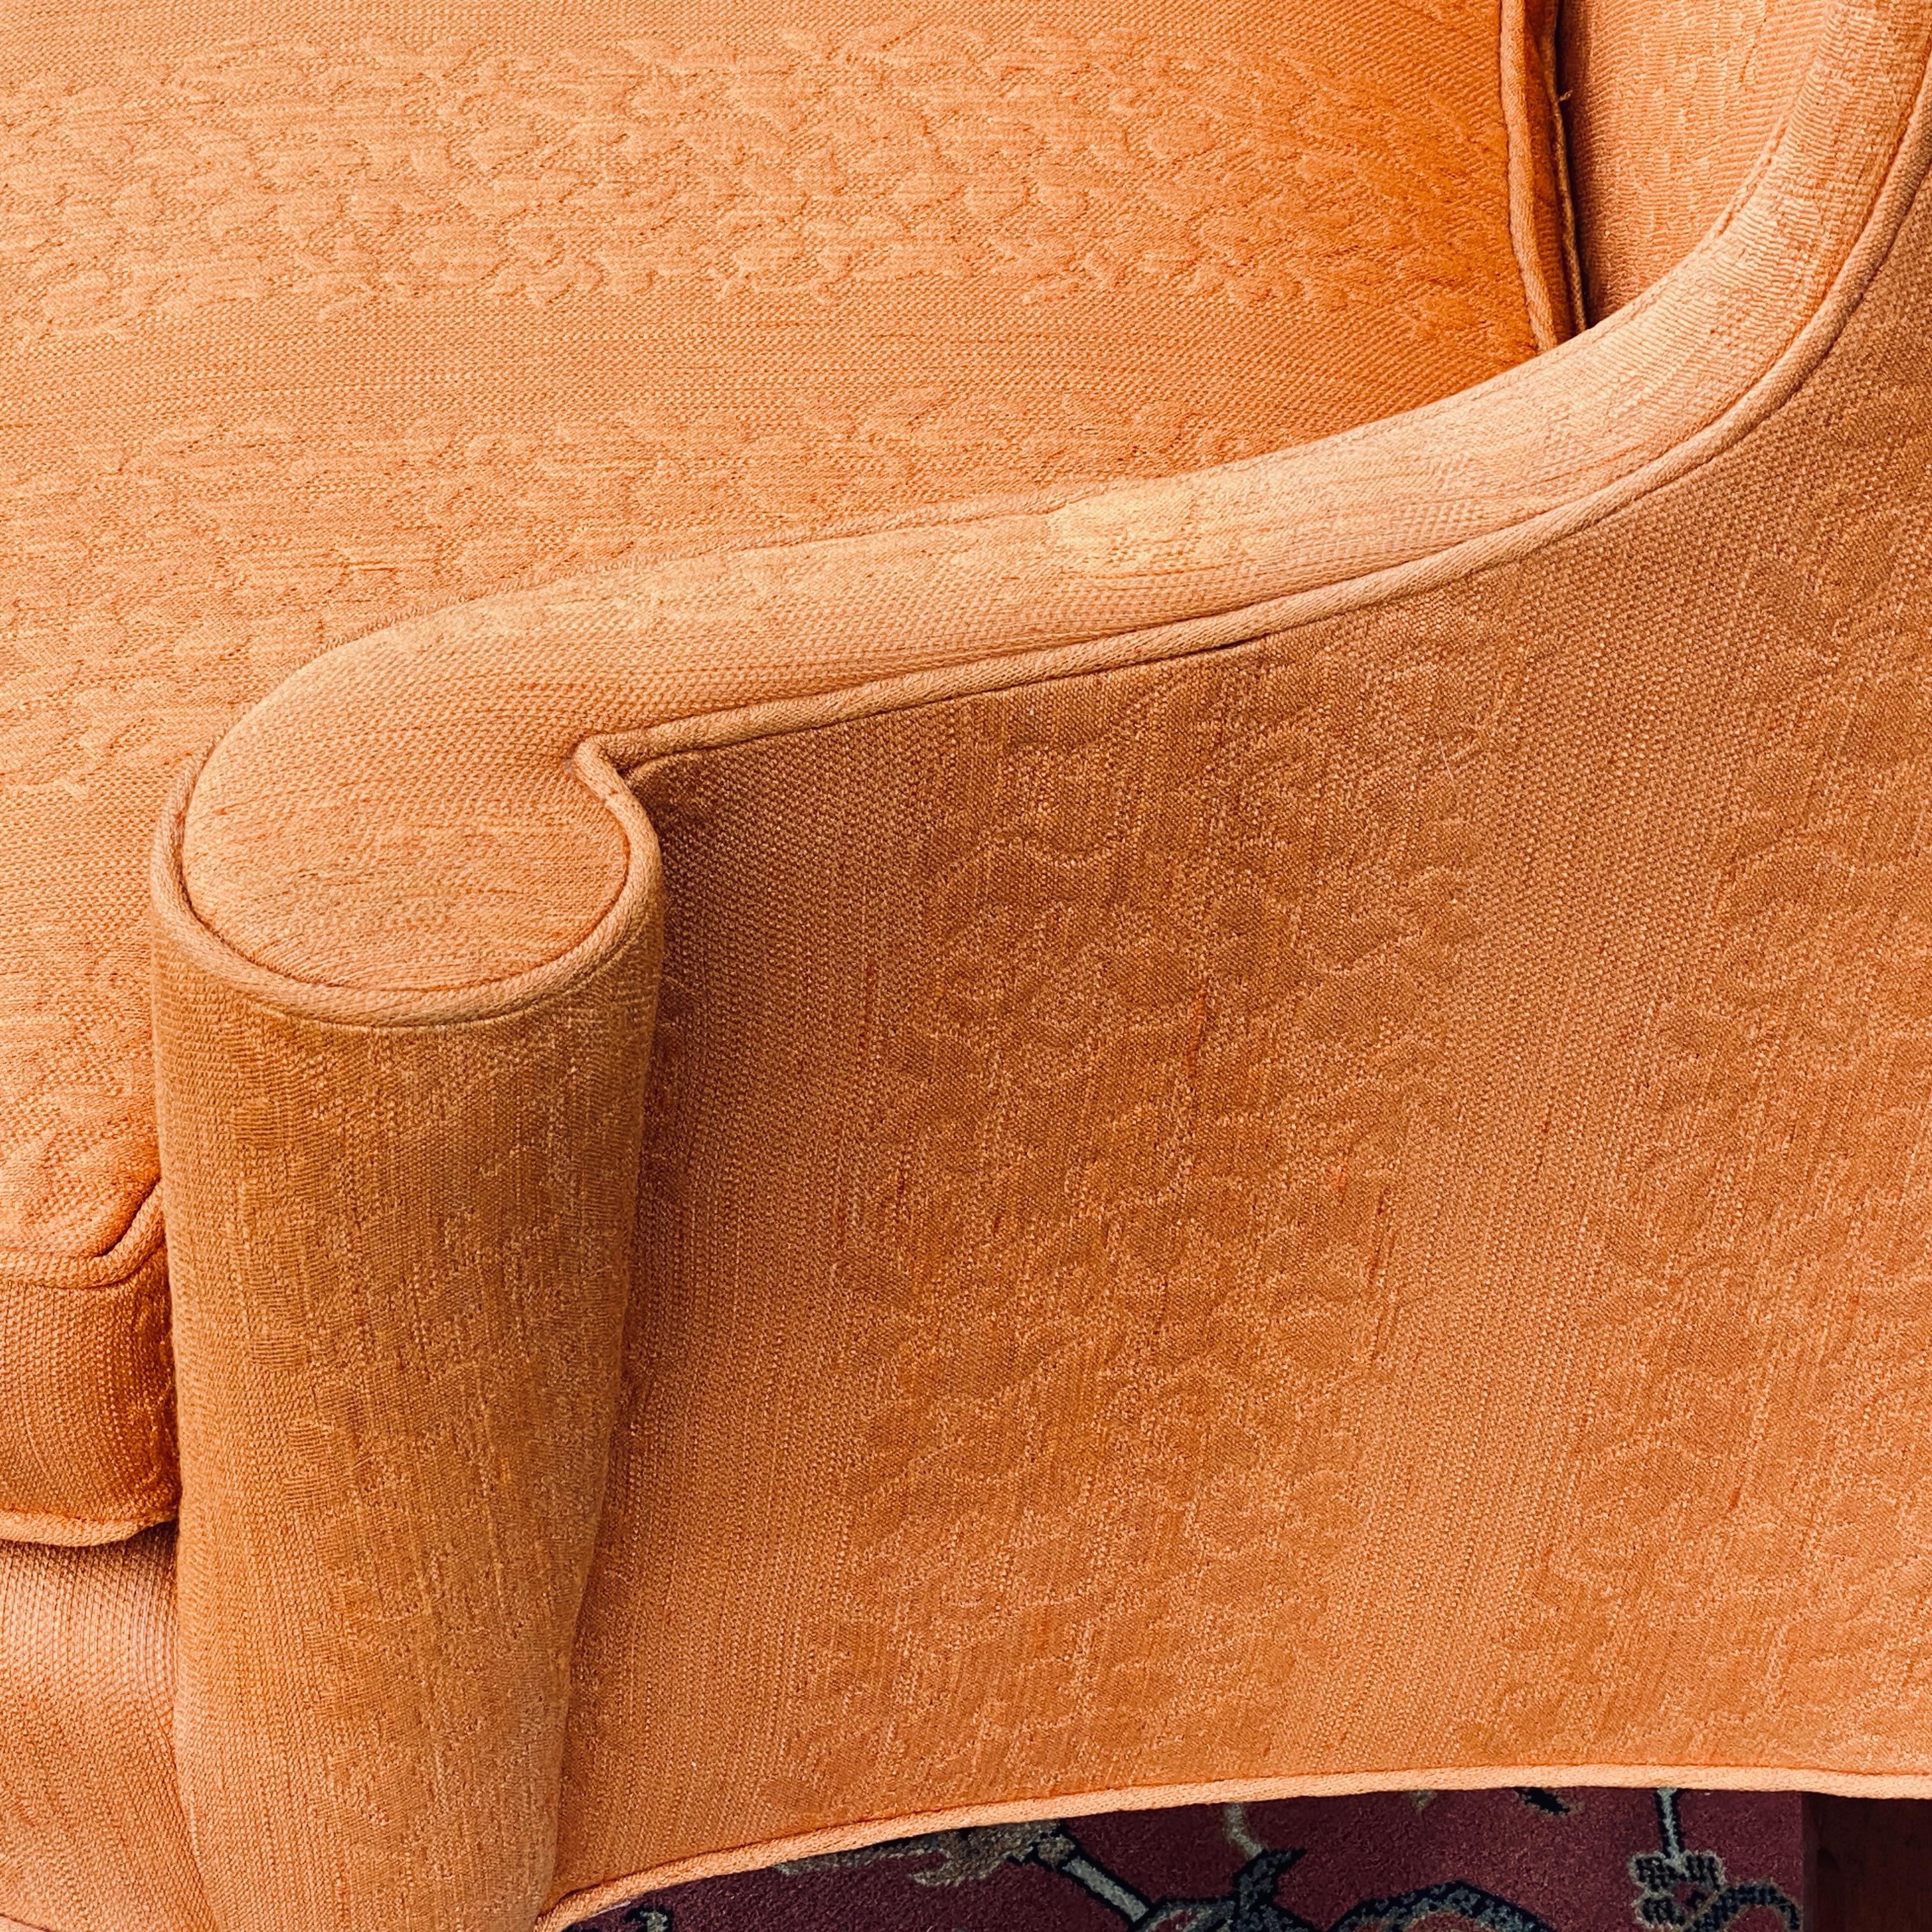 W. & J. Sloane Orange Jacquard Mahogany Wingback Chair For Sale 4